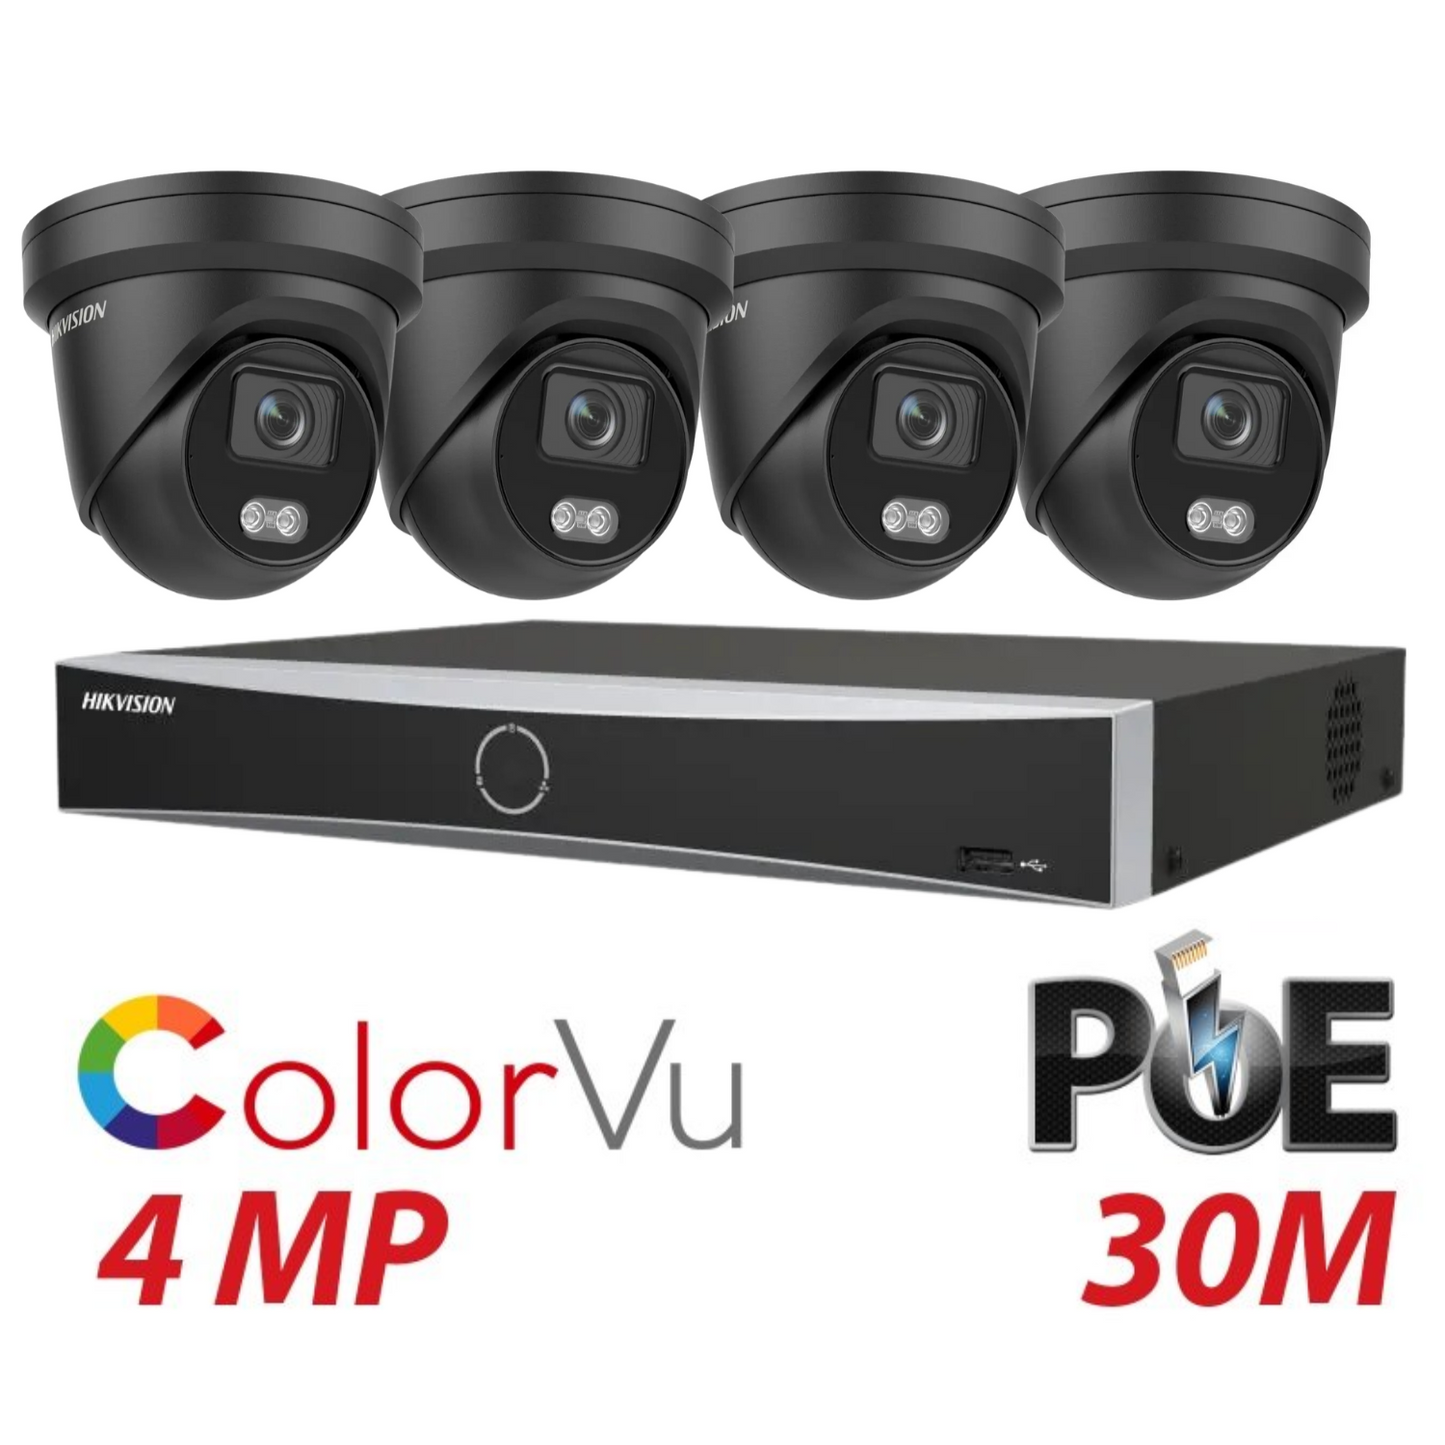 Hikvision CCTV kit, 4 x 4mp Smart Hybrid Colorvu IP Poe cameras with Audio, 1 x 4 Channel NVR